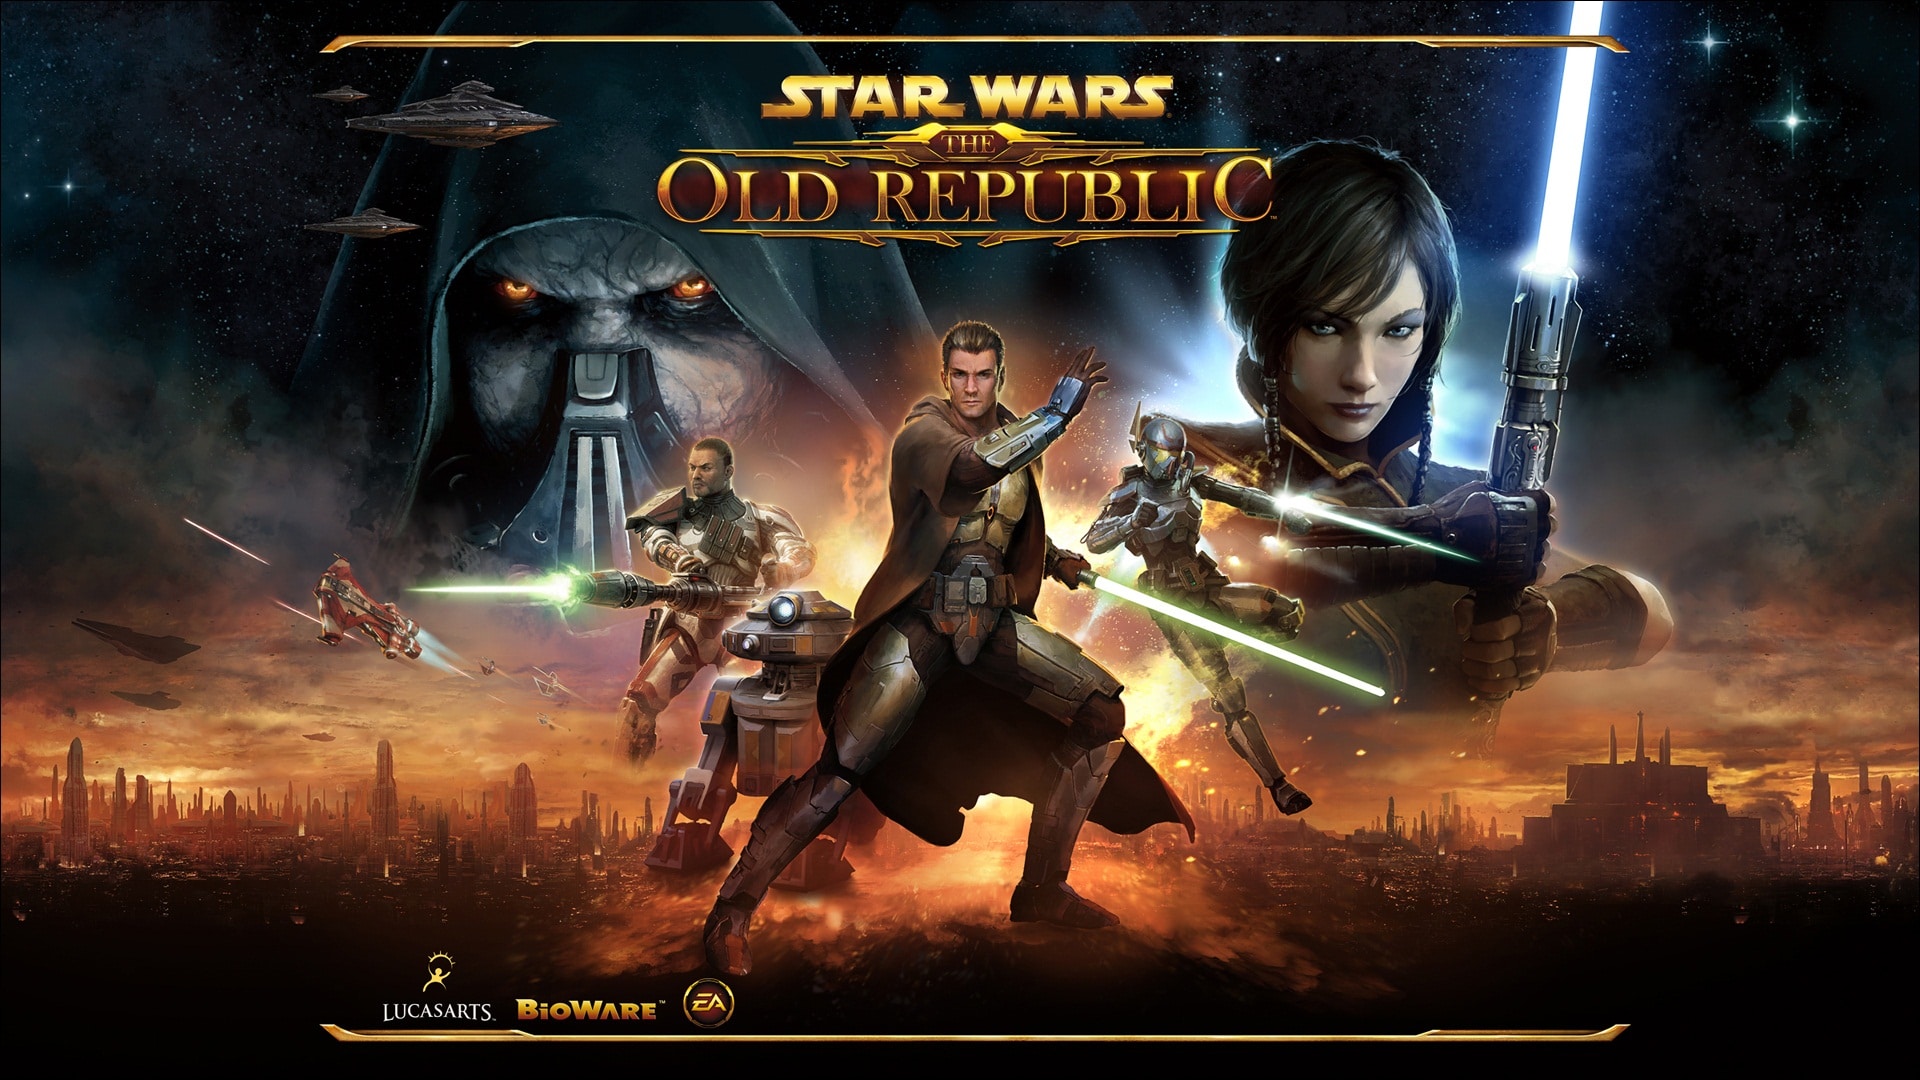 Star Wars, Star Wars: Old Republic, Lucasfilm, Old Republic, Disney, Game of Thrones